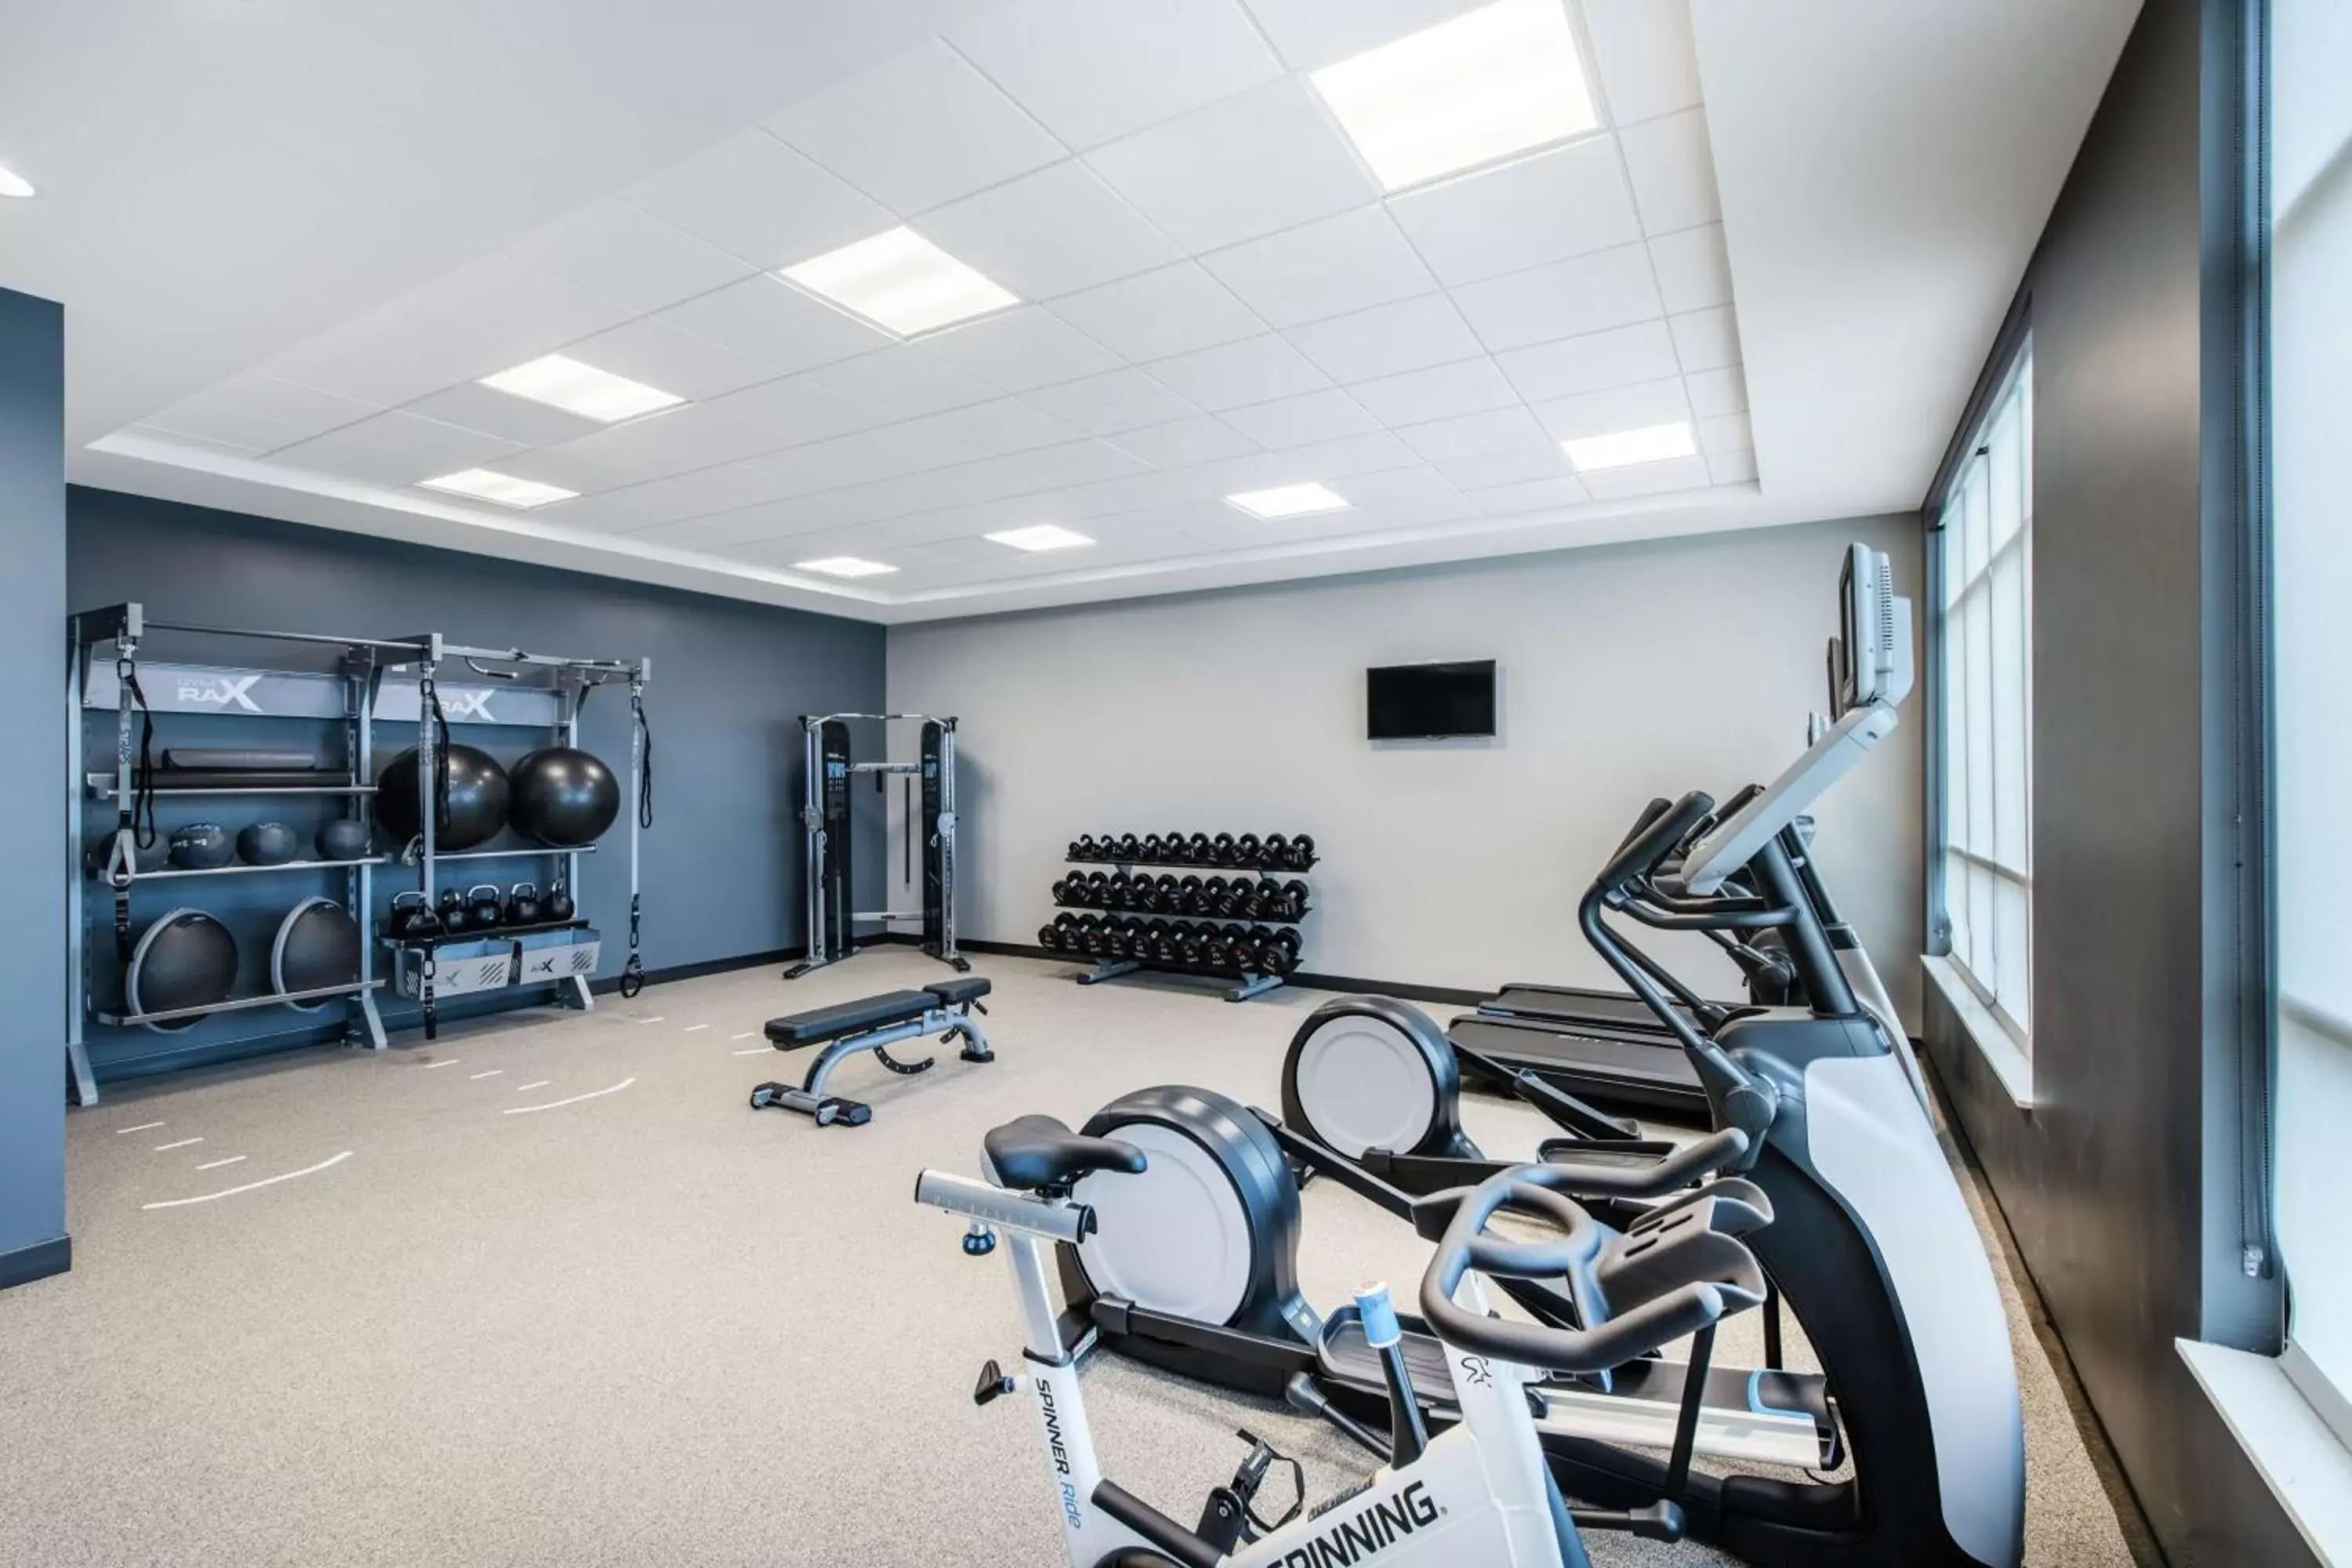 Fitness centre/facilities, Fitness Center/Facilities in Hilton Garden Inn Pittsburgh Area Beaver Valley, Pa